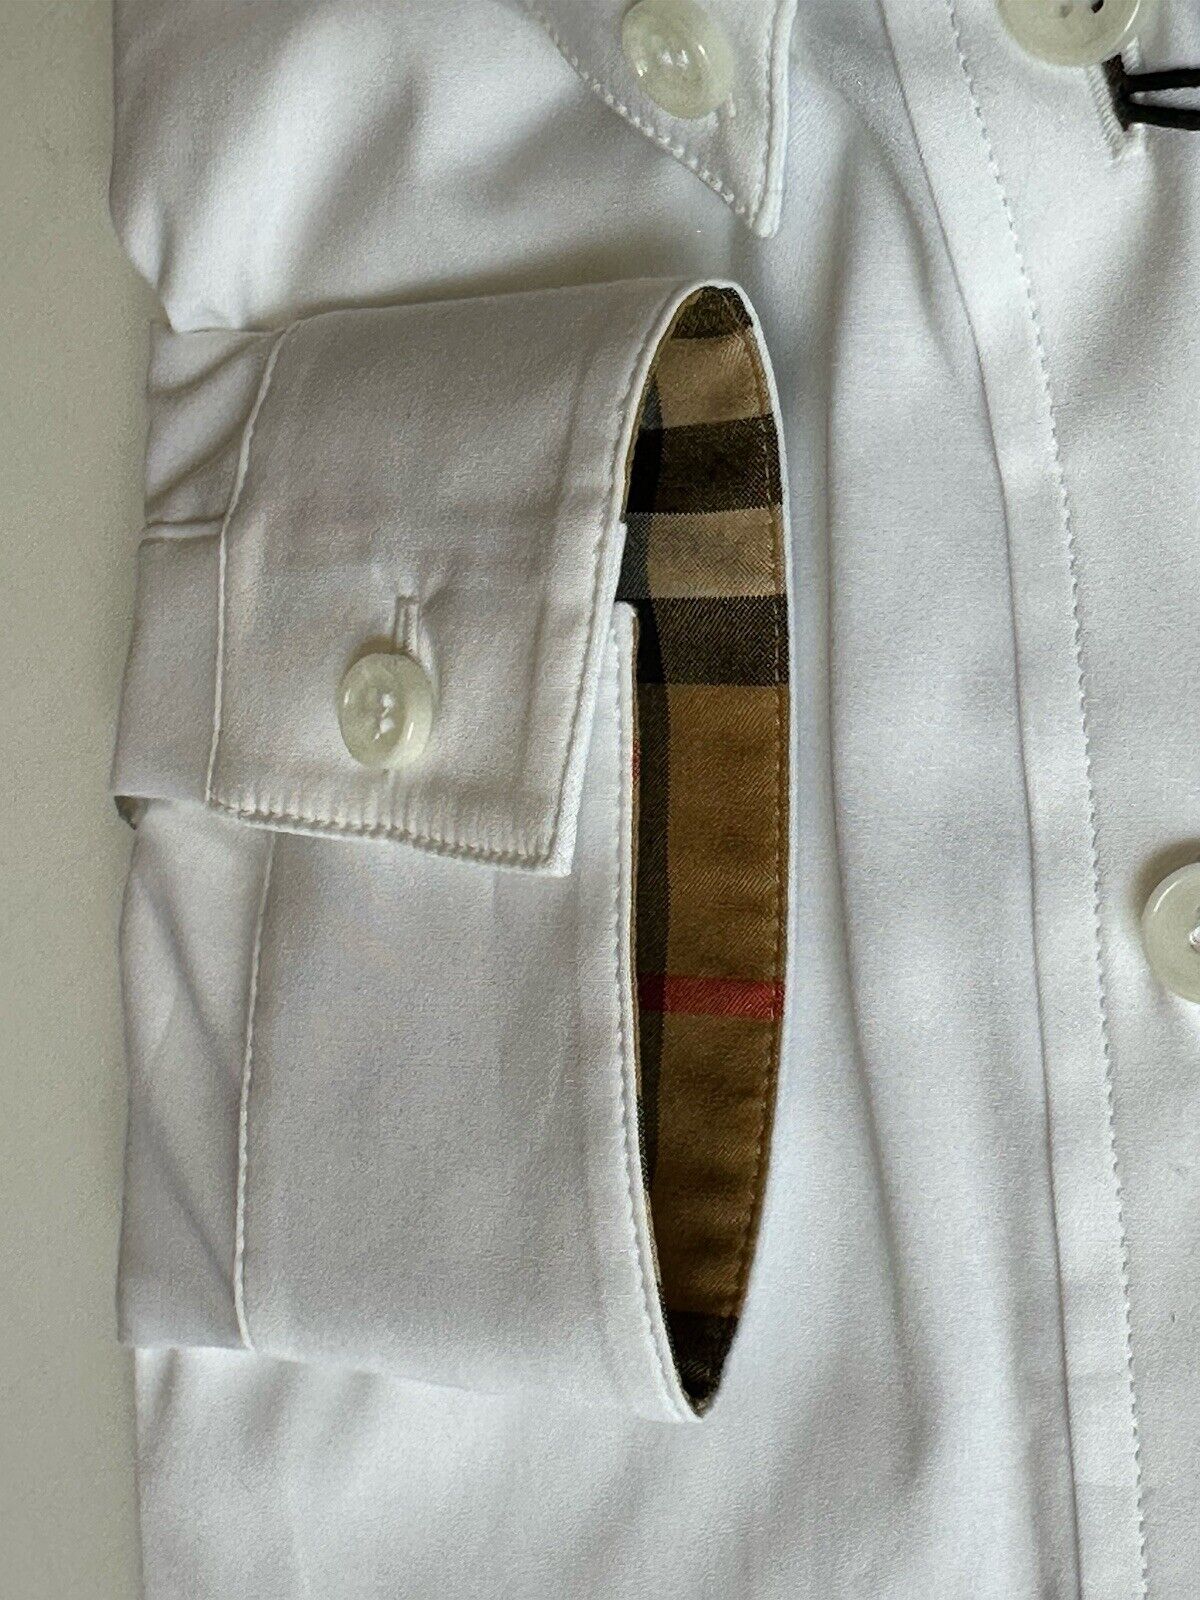 Burberry Women’s Optic White Cotton Button-Down Shirt 10 US IT 8073309 NWT $510